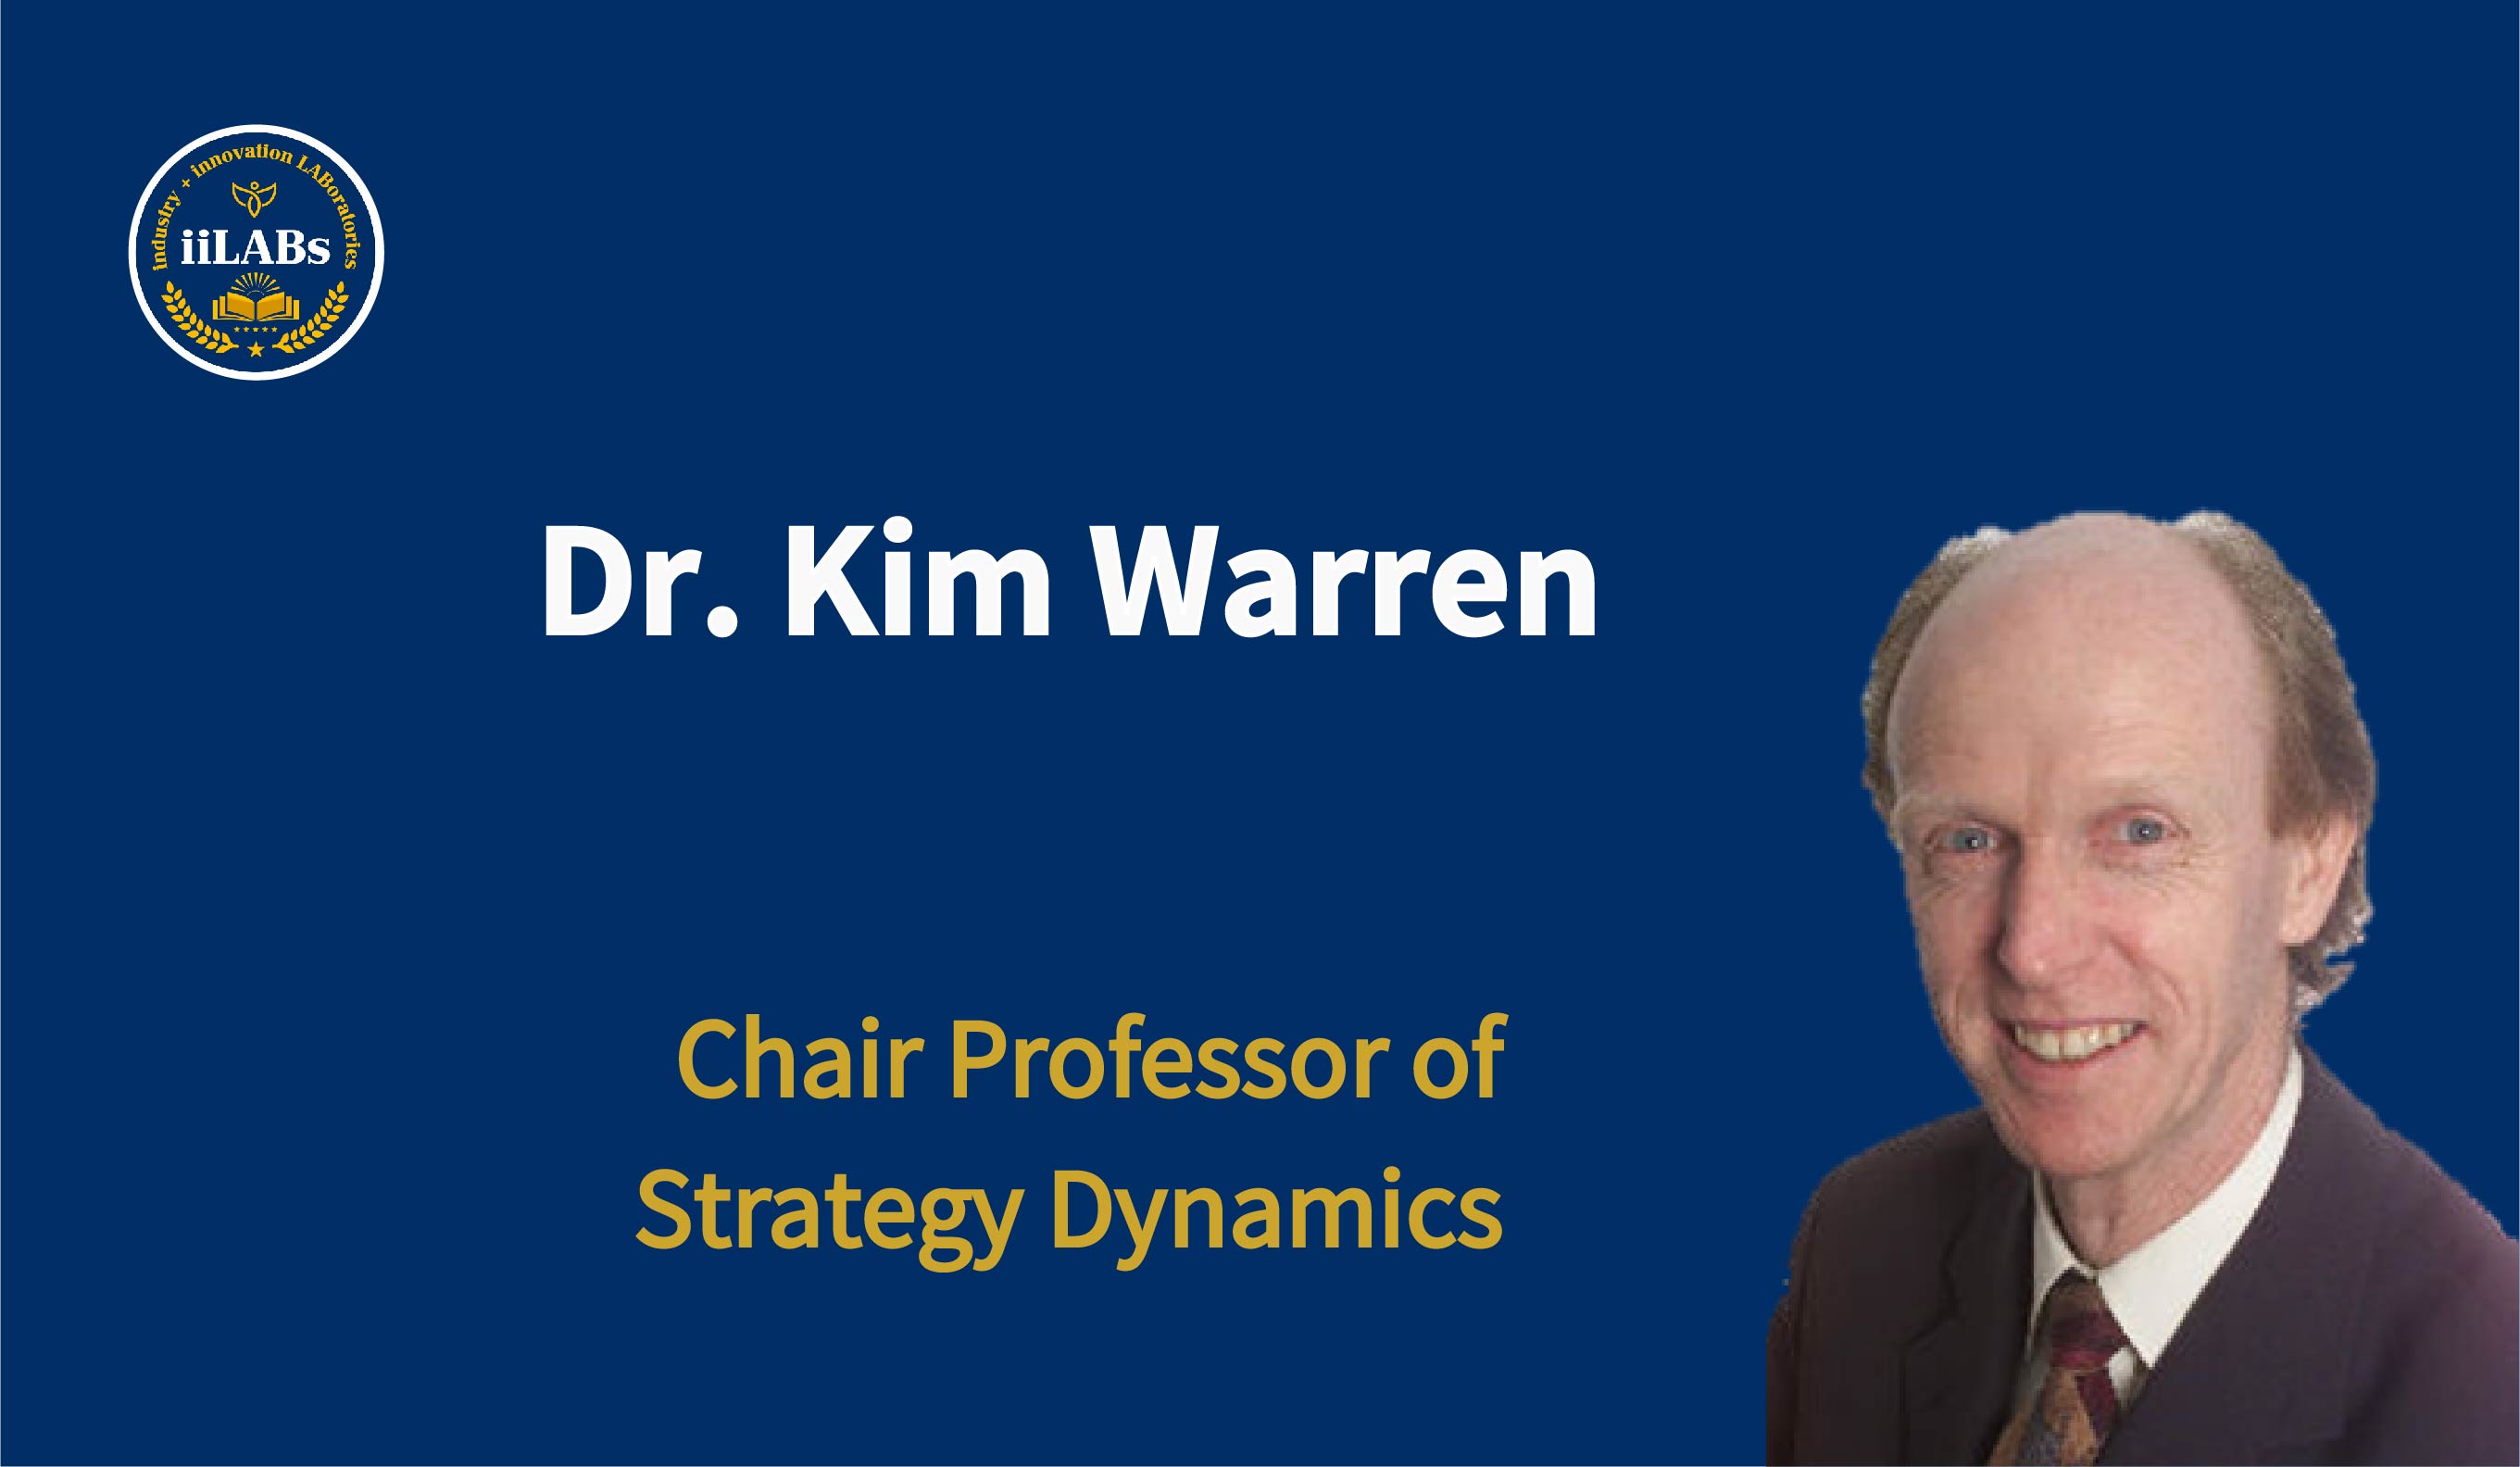 Dr. Kim Warren, Chair Professor of Strategy Dynamics